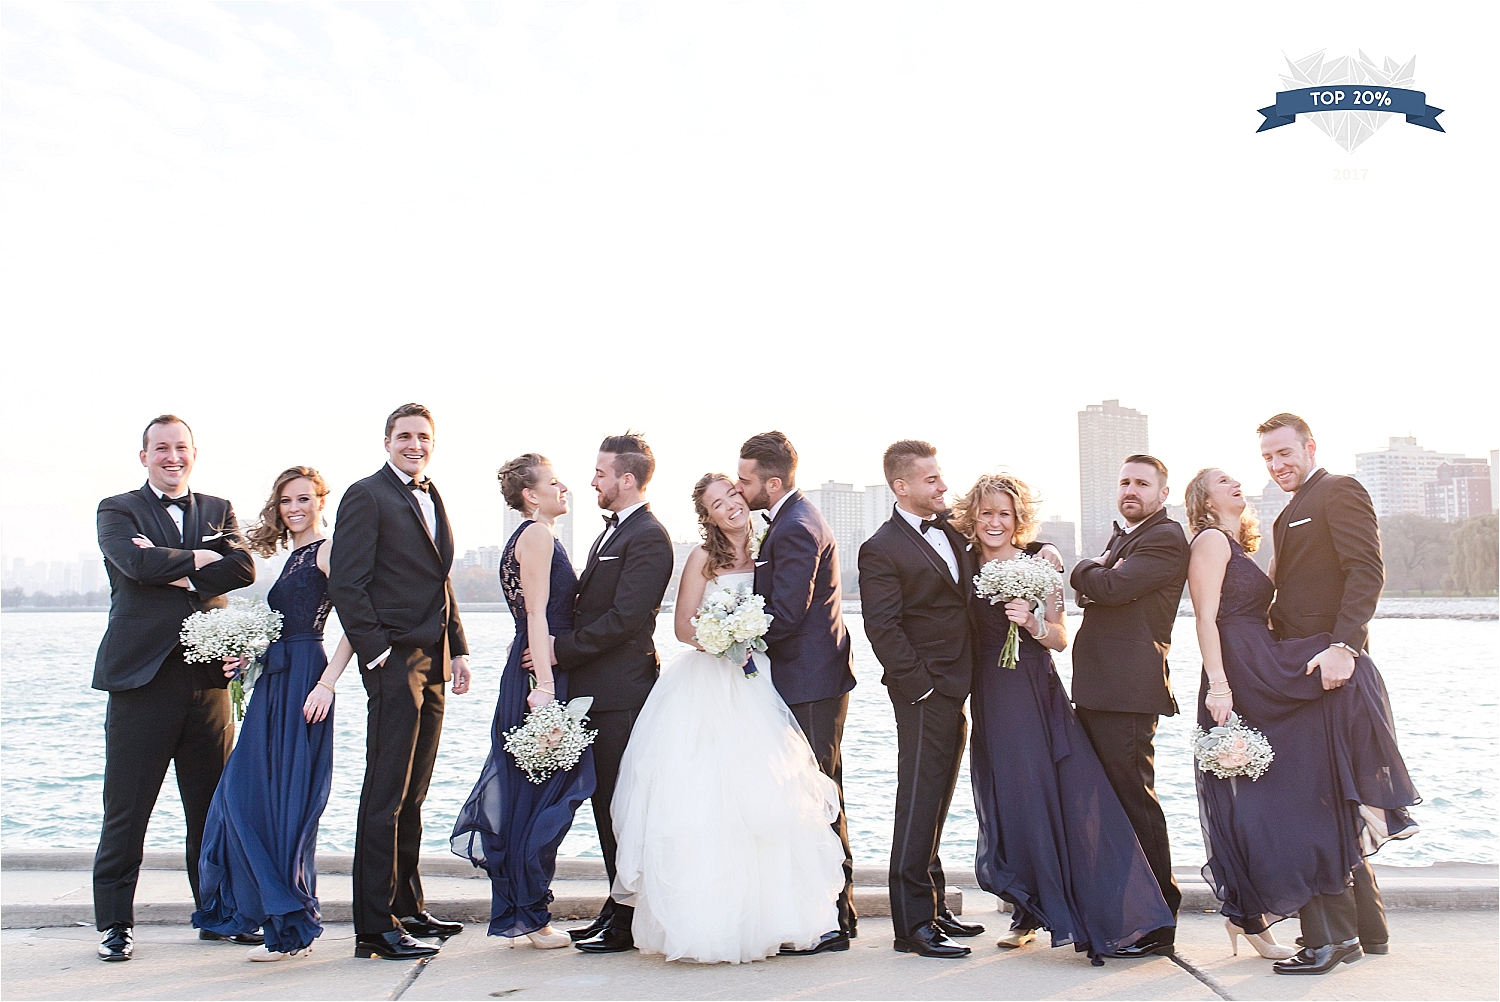 Top Chicago Wedding Photographers